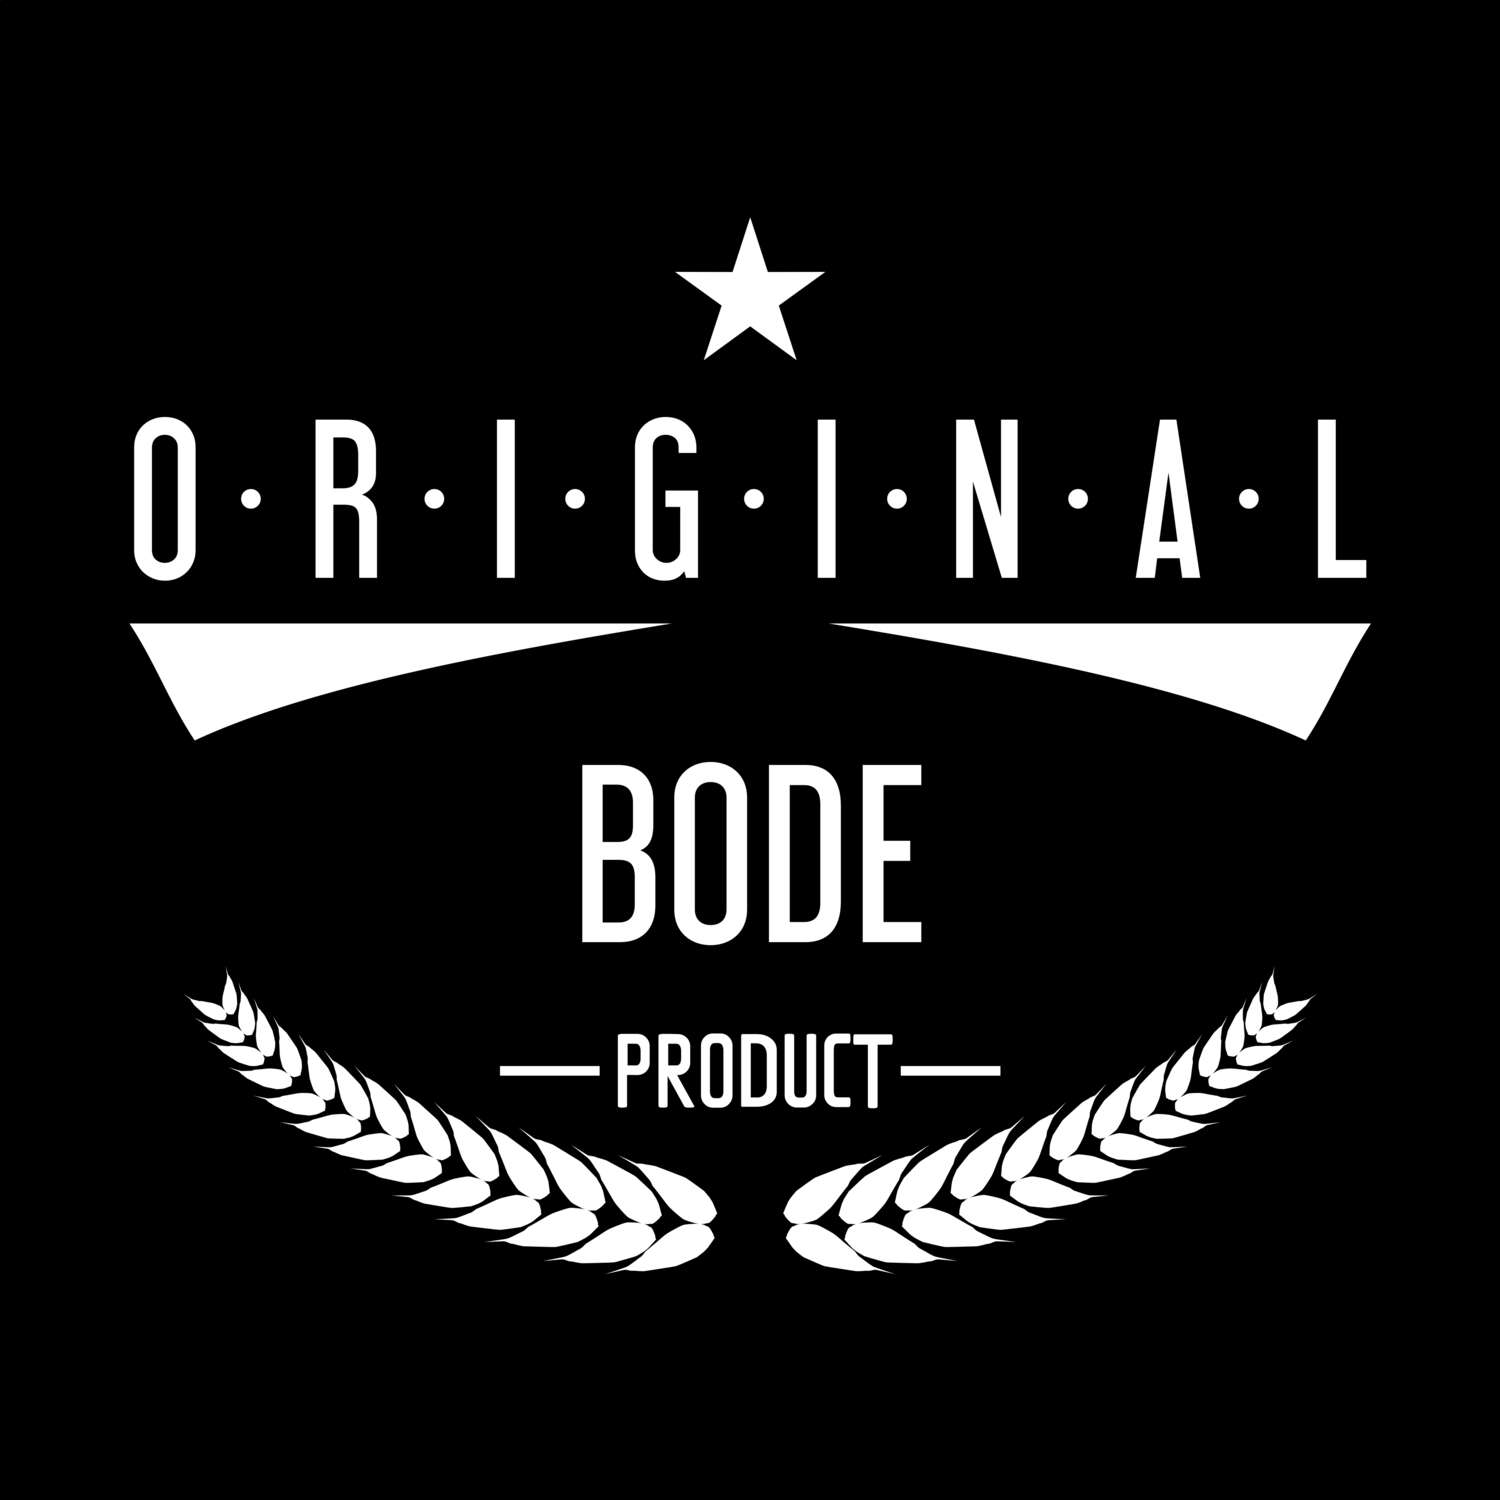 Bode T-Shirt »Original Product«